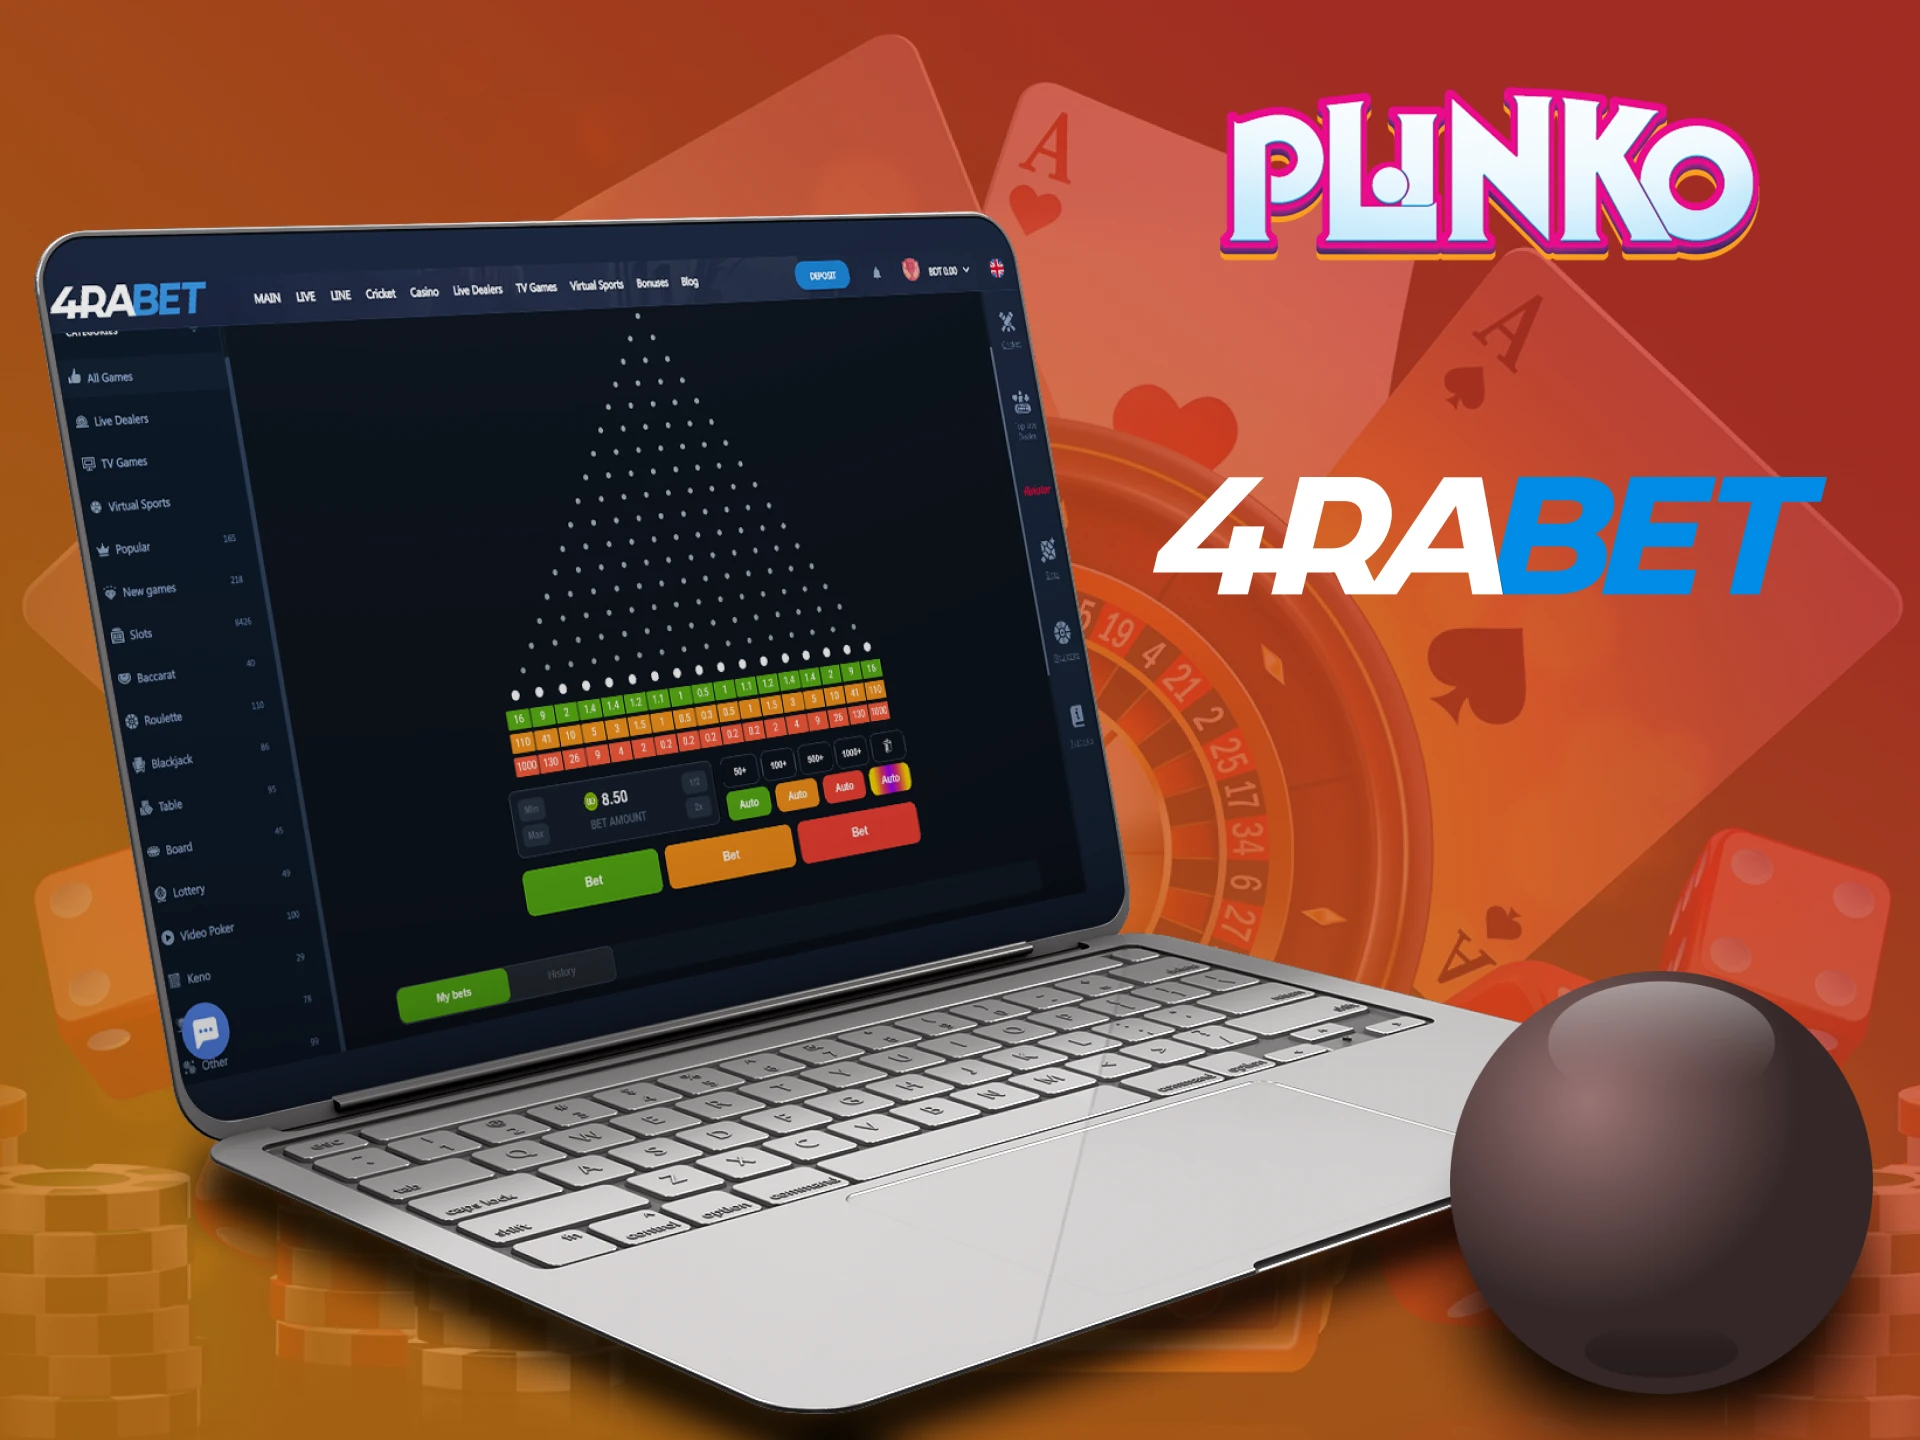 Play Plinko on the 4rabet website.